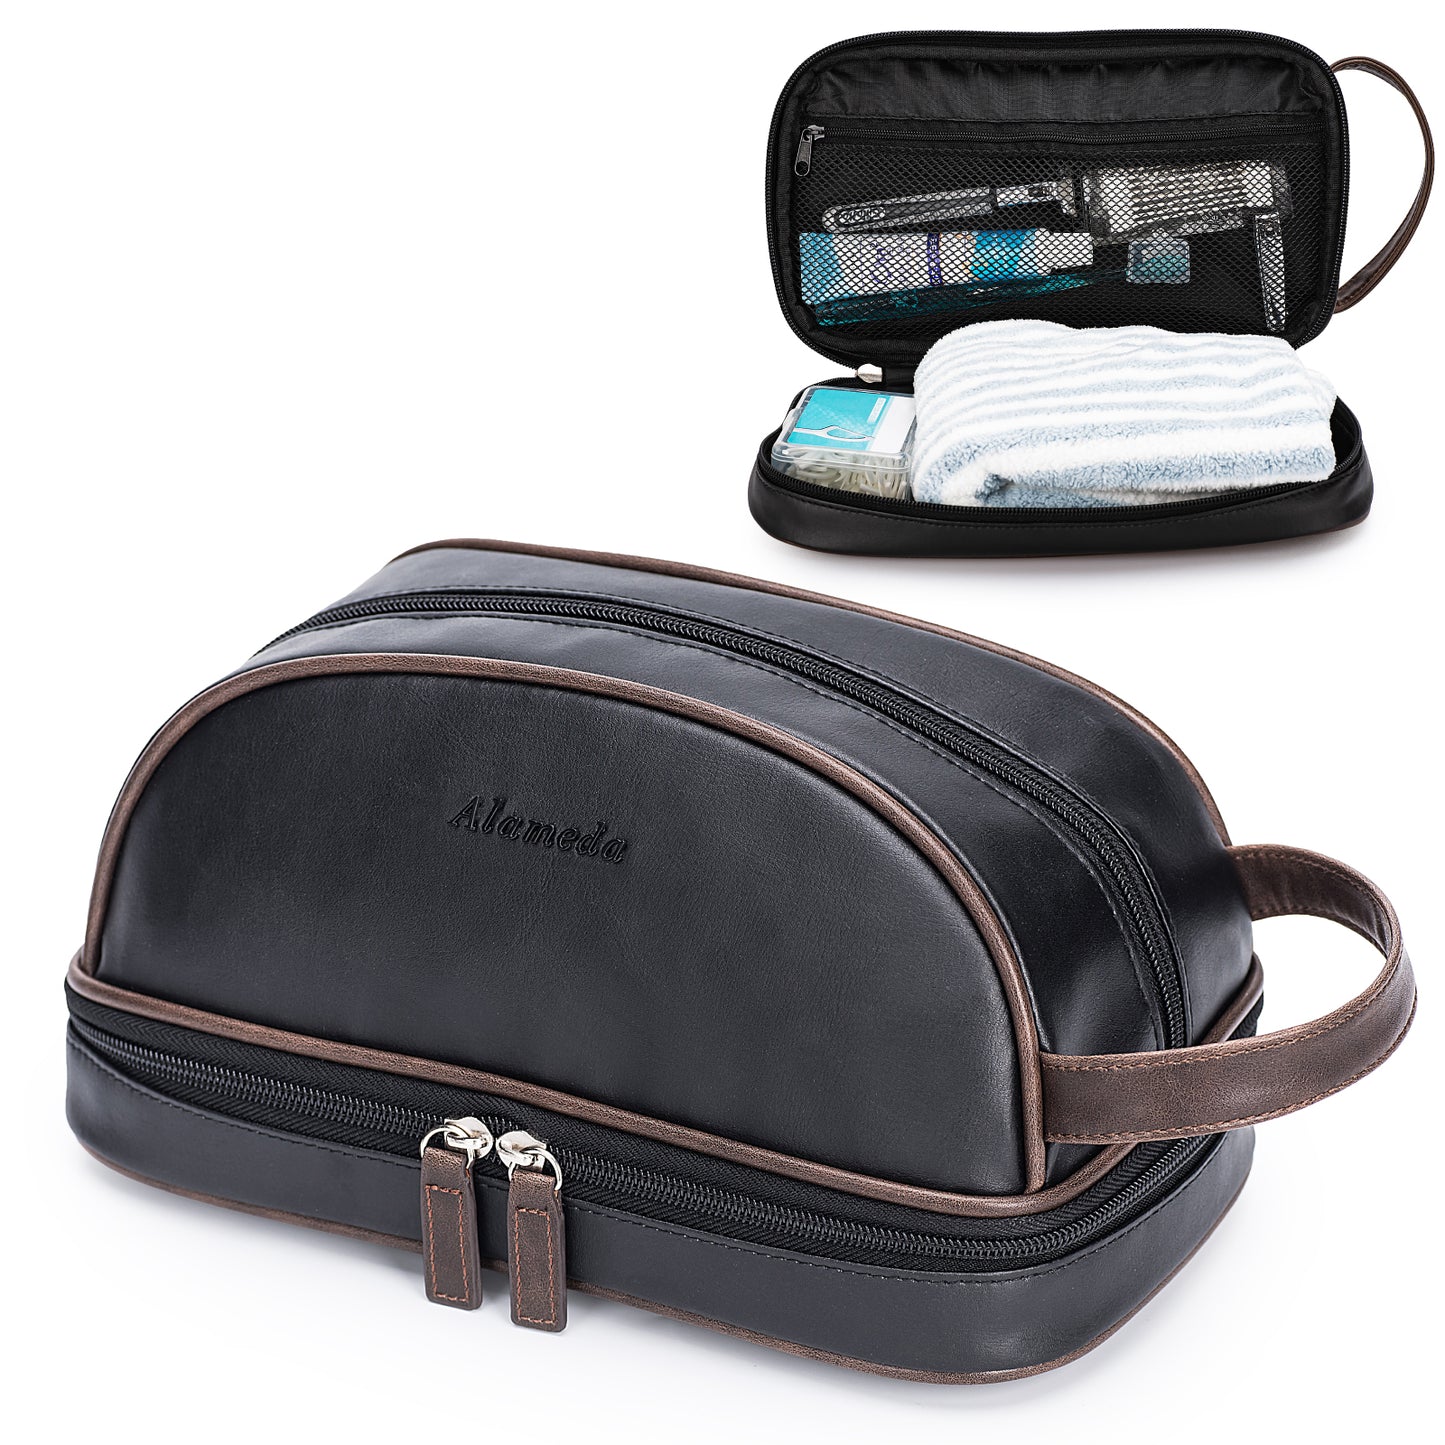 Alameda Toiletry Bag for Men, PU Leather Travel Organizer Shaving Bag Water-resistant Dopp Kit for Toiletries Accessories Black